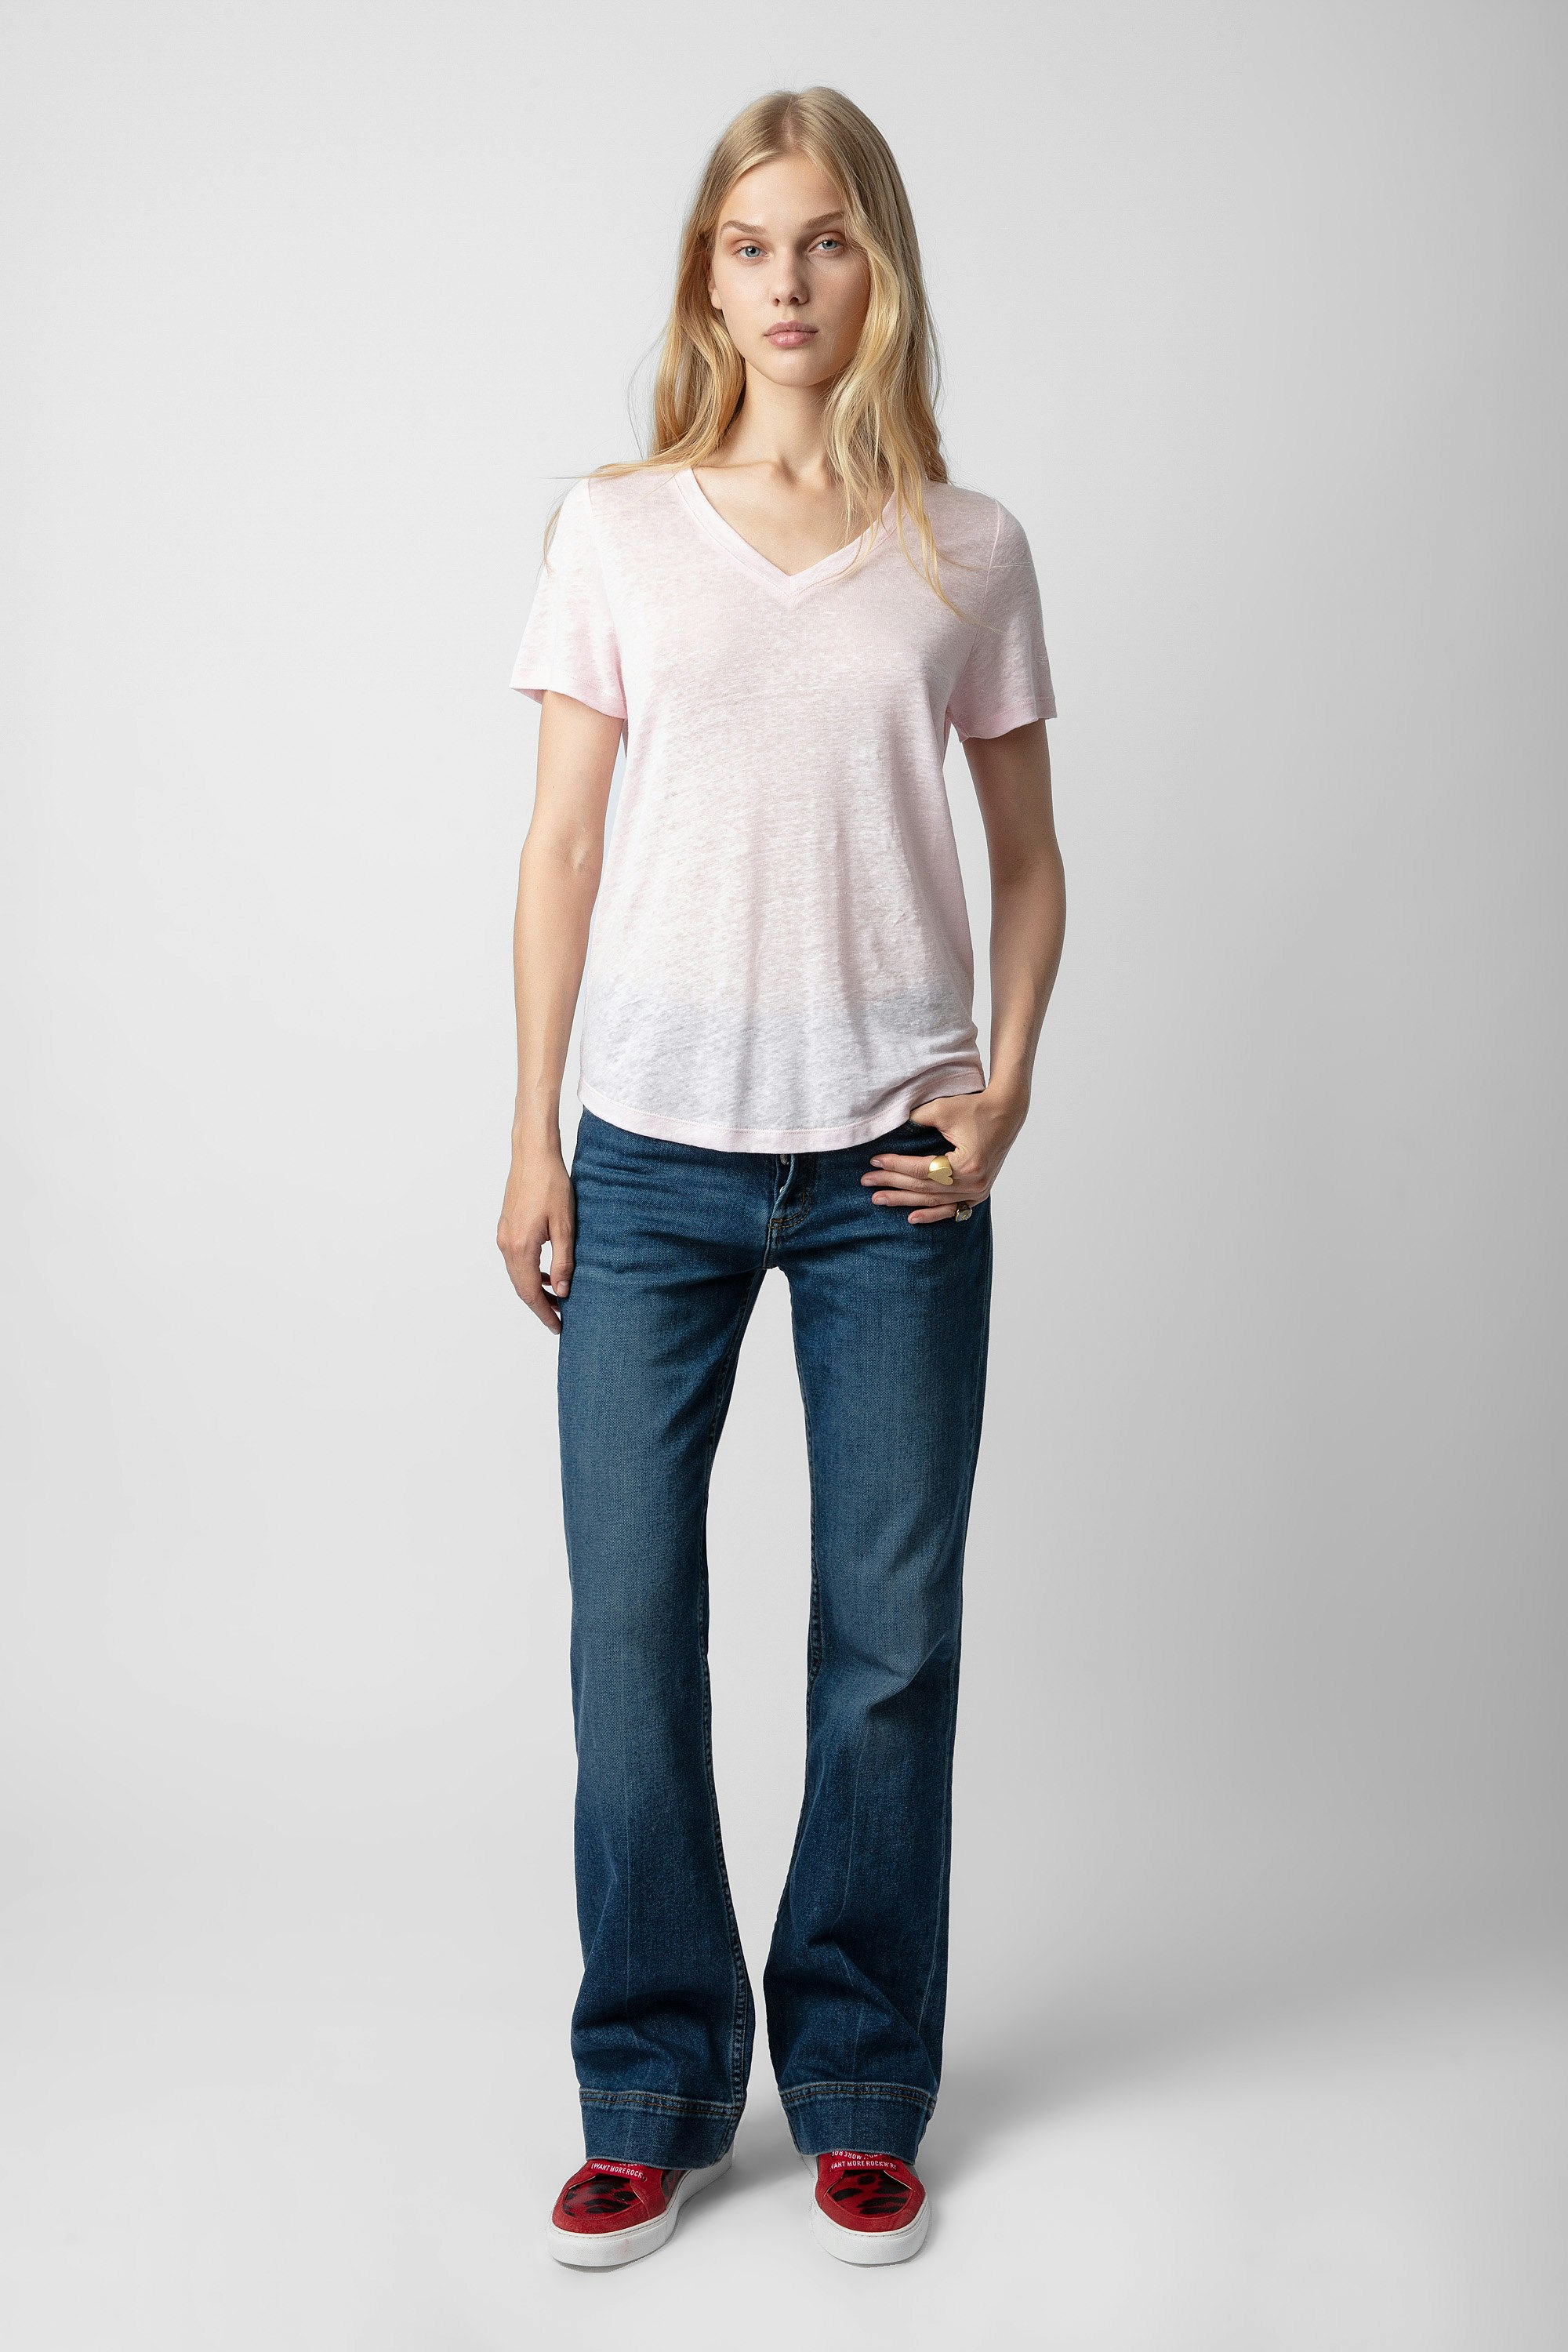 Atia Wings Linen T-shirt - Women’s light pink linen T-shirt with wings motif on the left sleeve.